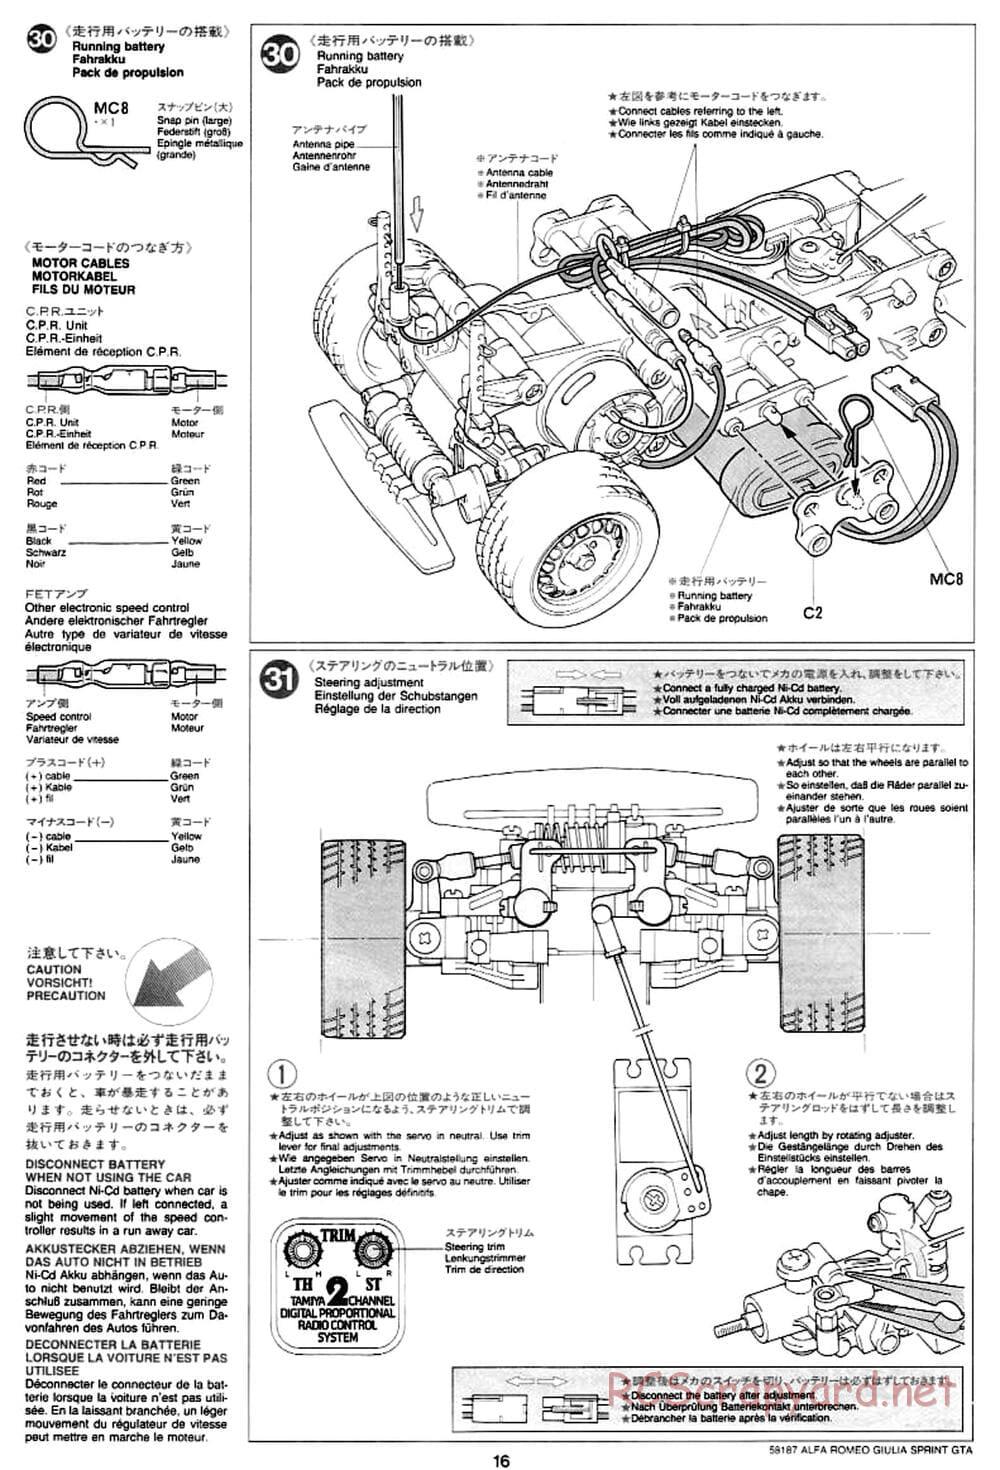 Tamiya - Alfa Romeo Giulia Sprint GTA - M02M Chassis - Manual - Page 16